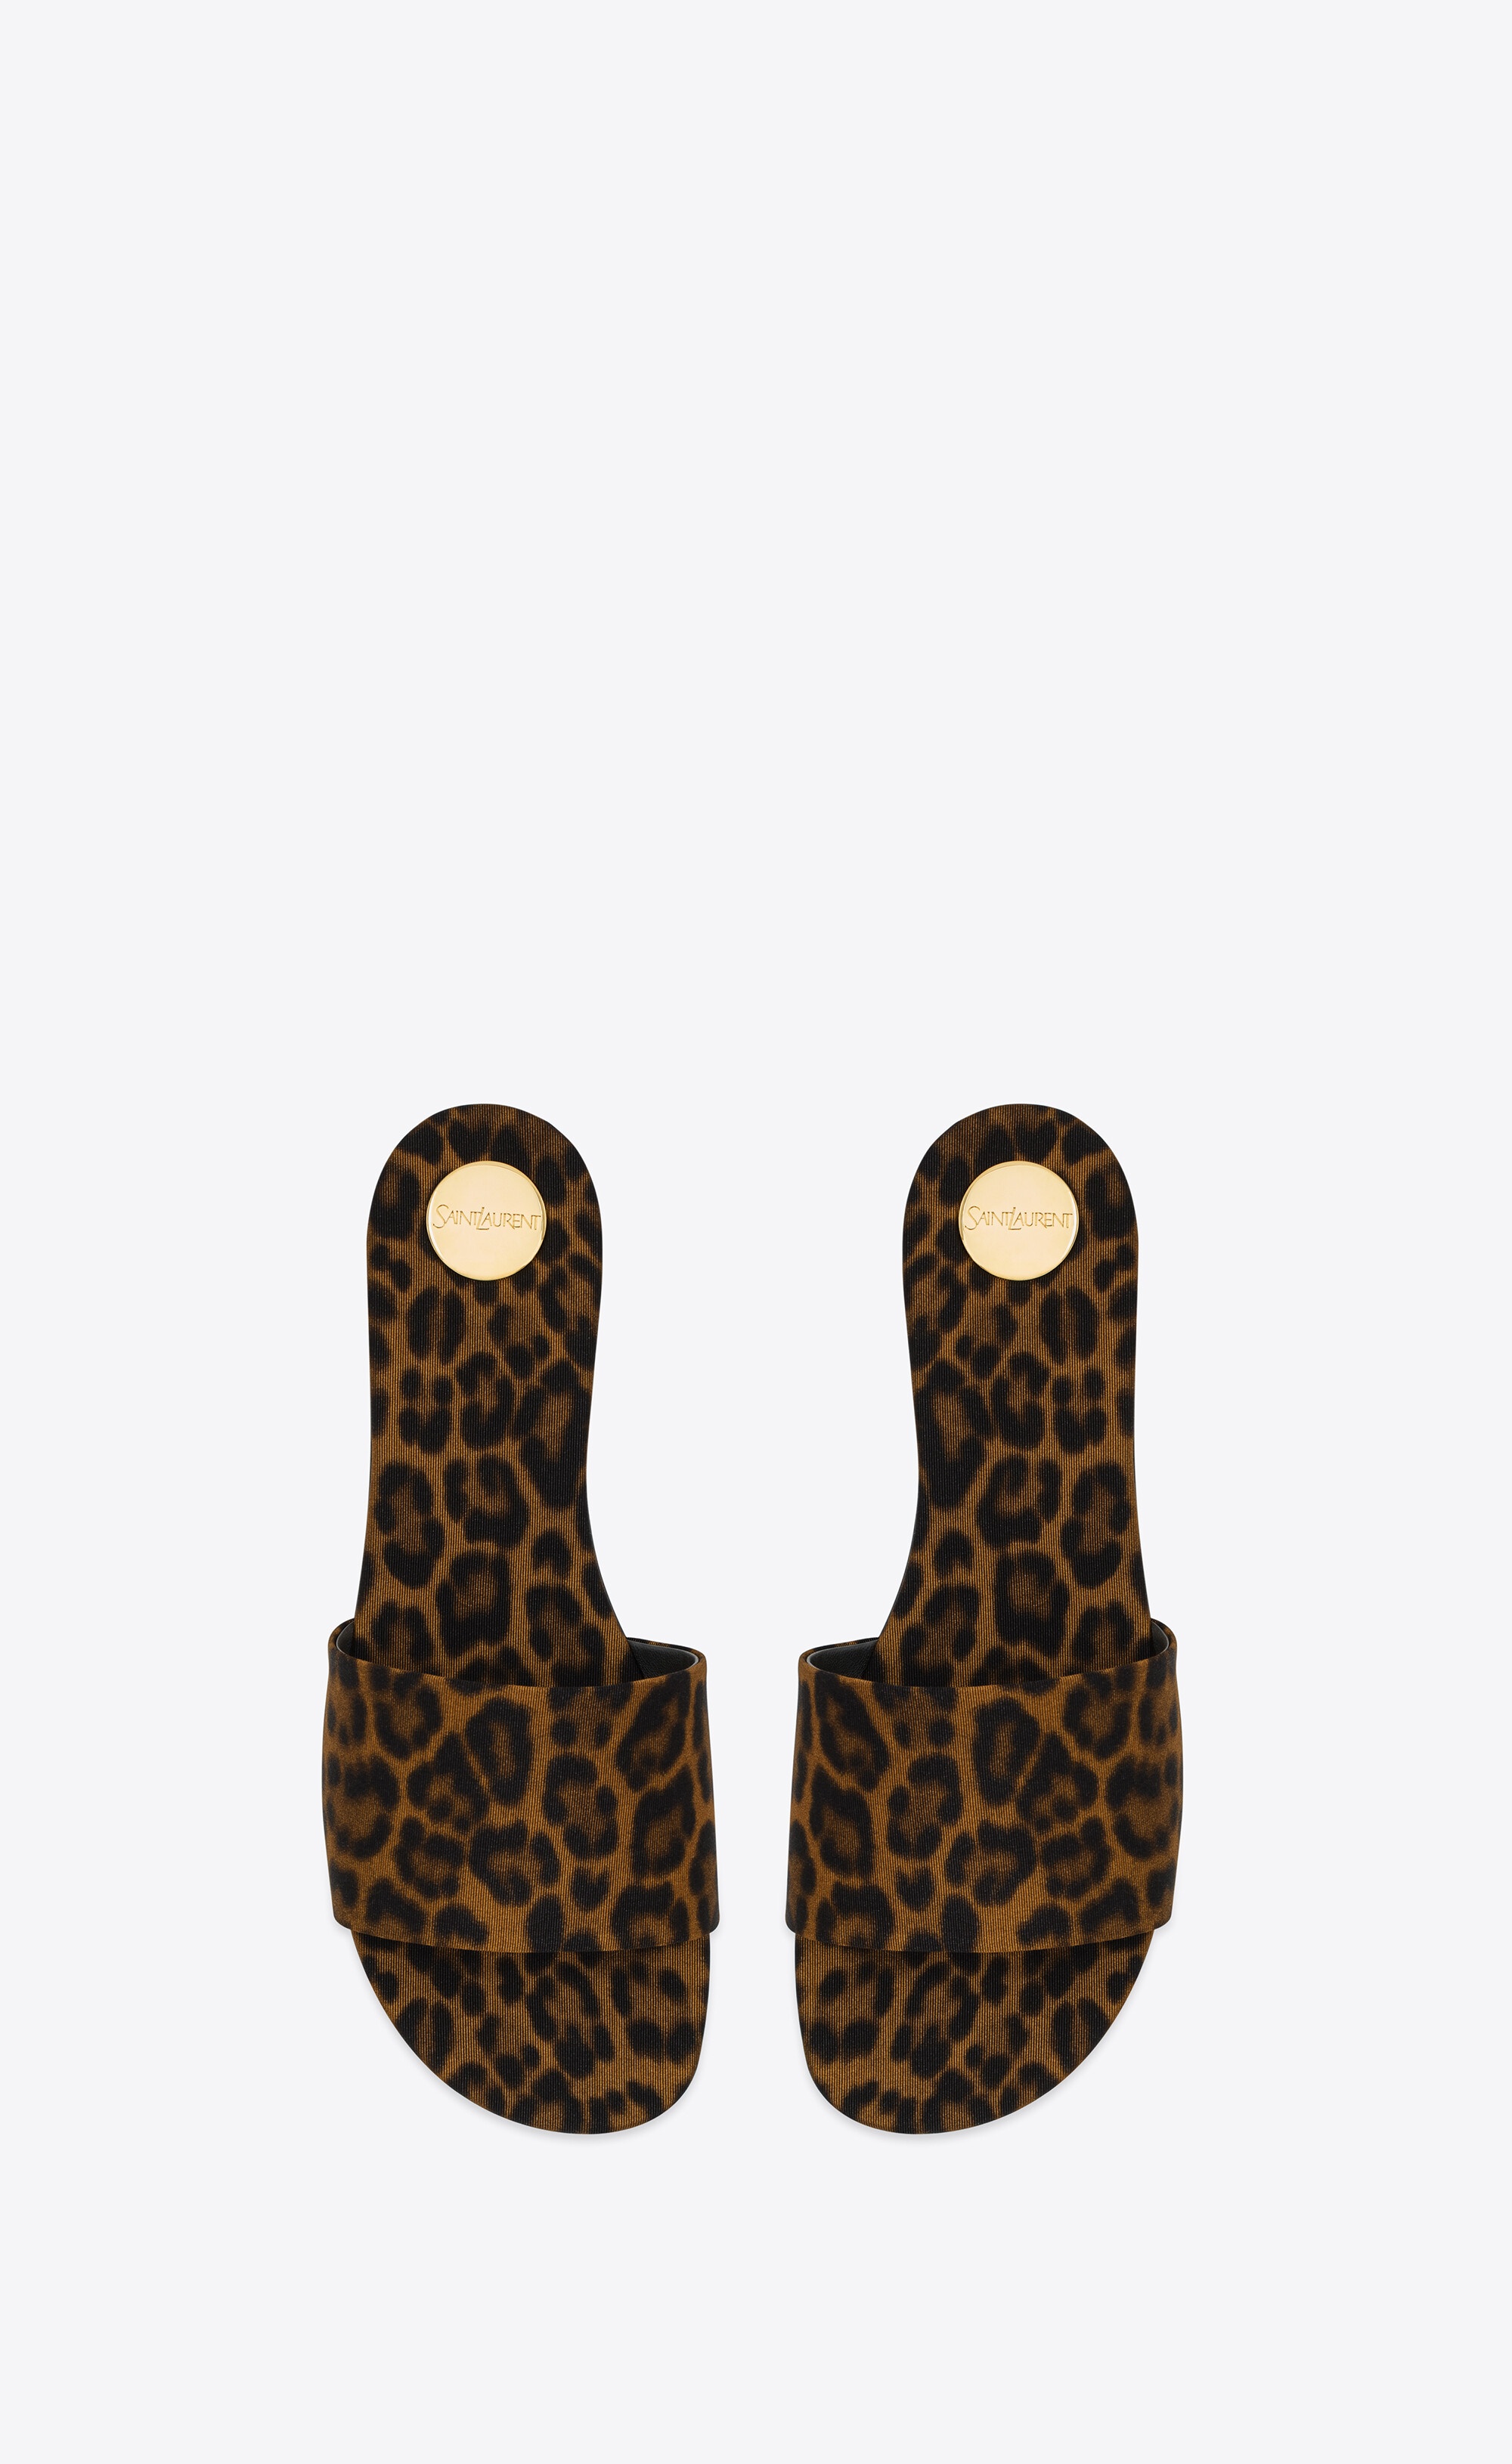 carlyle slides in leopard grosgrain - 1